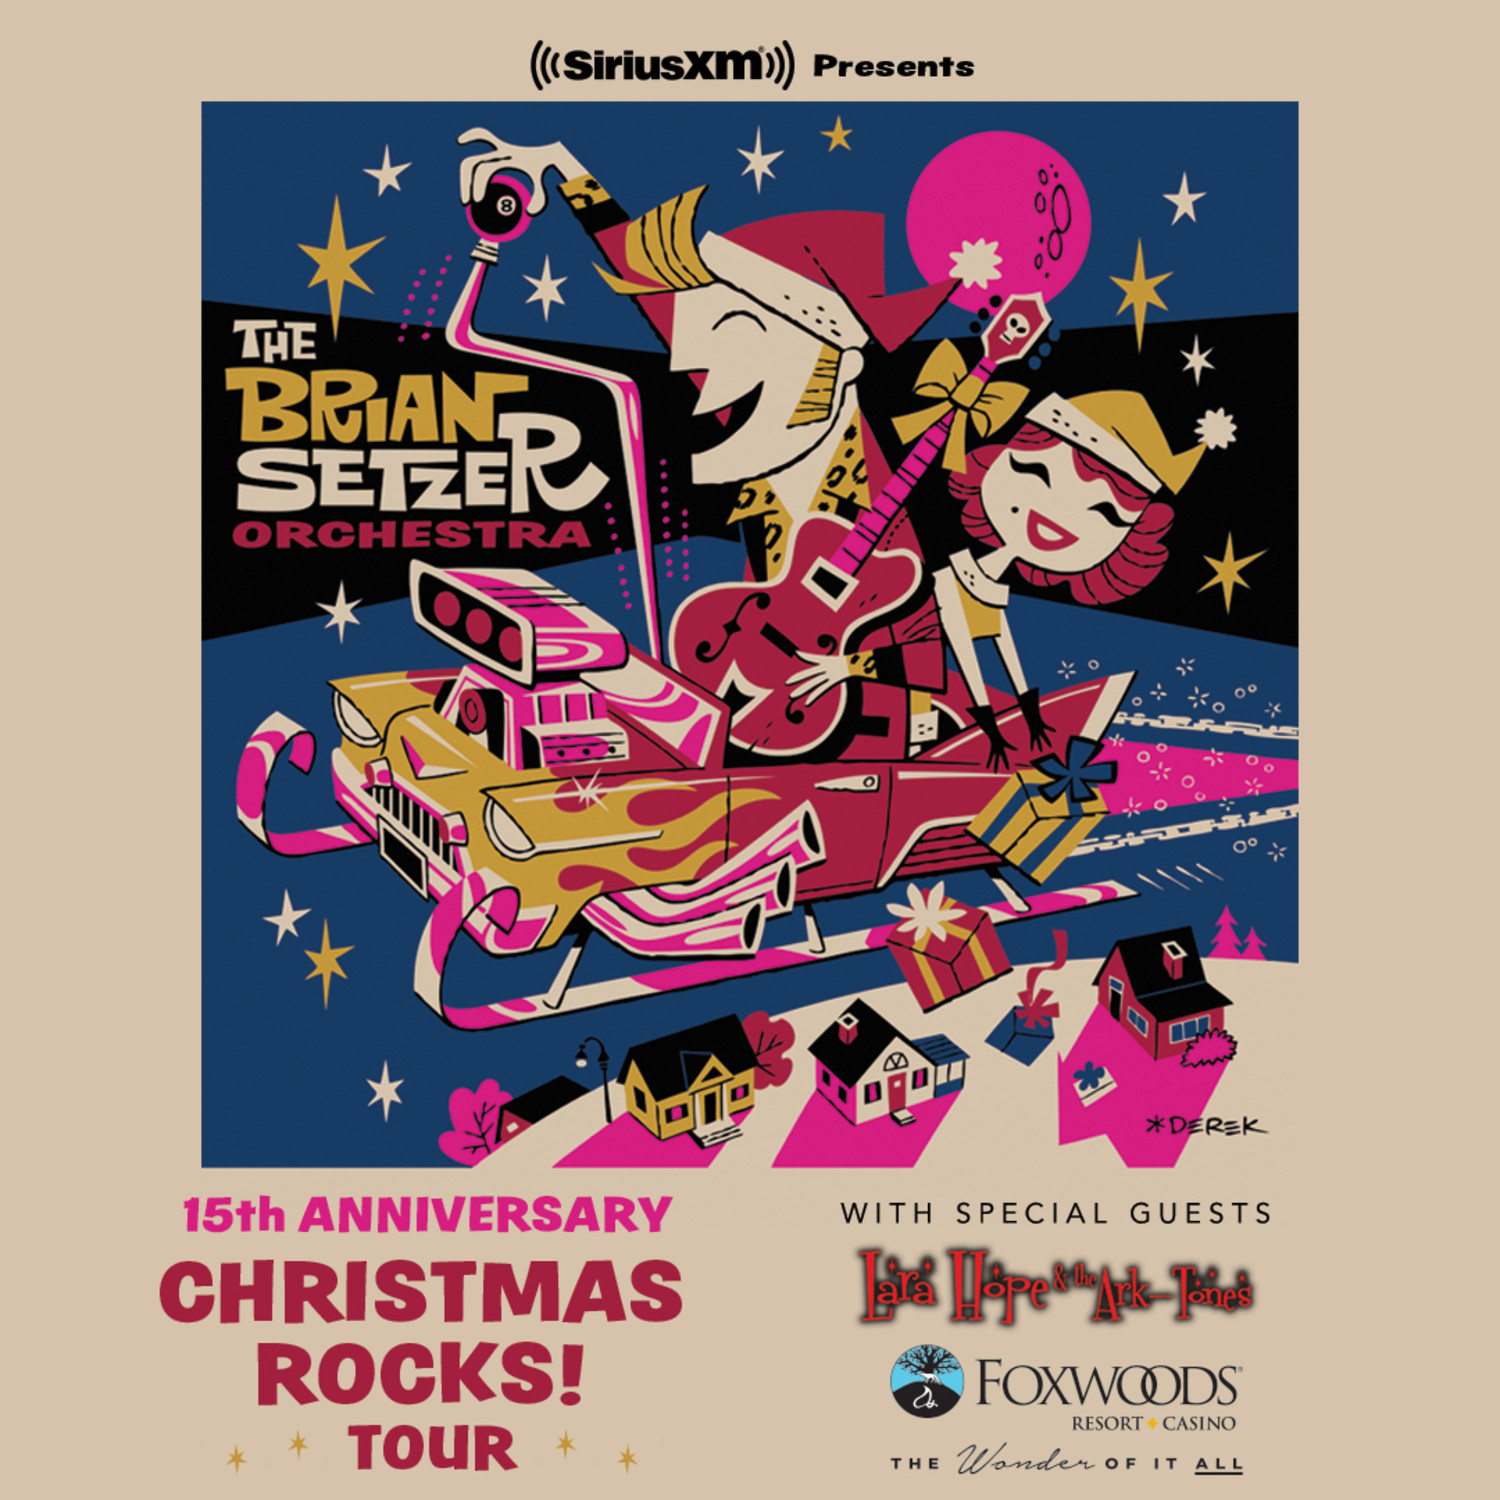 Brian Setzer Orchestra Christmas Rocks! Tour at Foxwoods Resort Casino